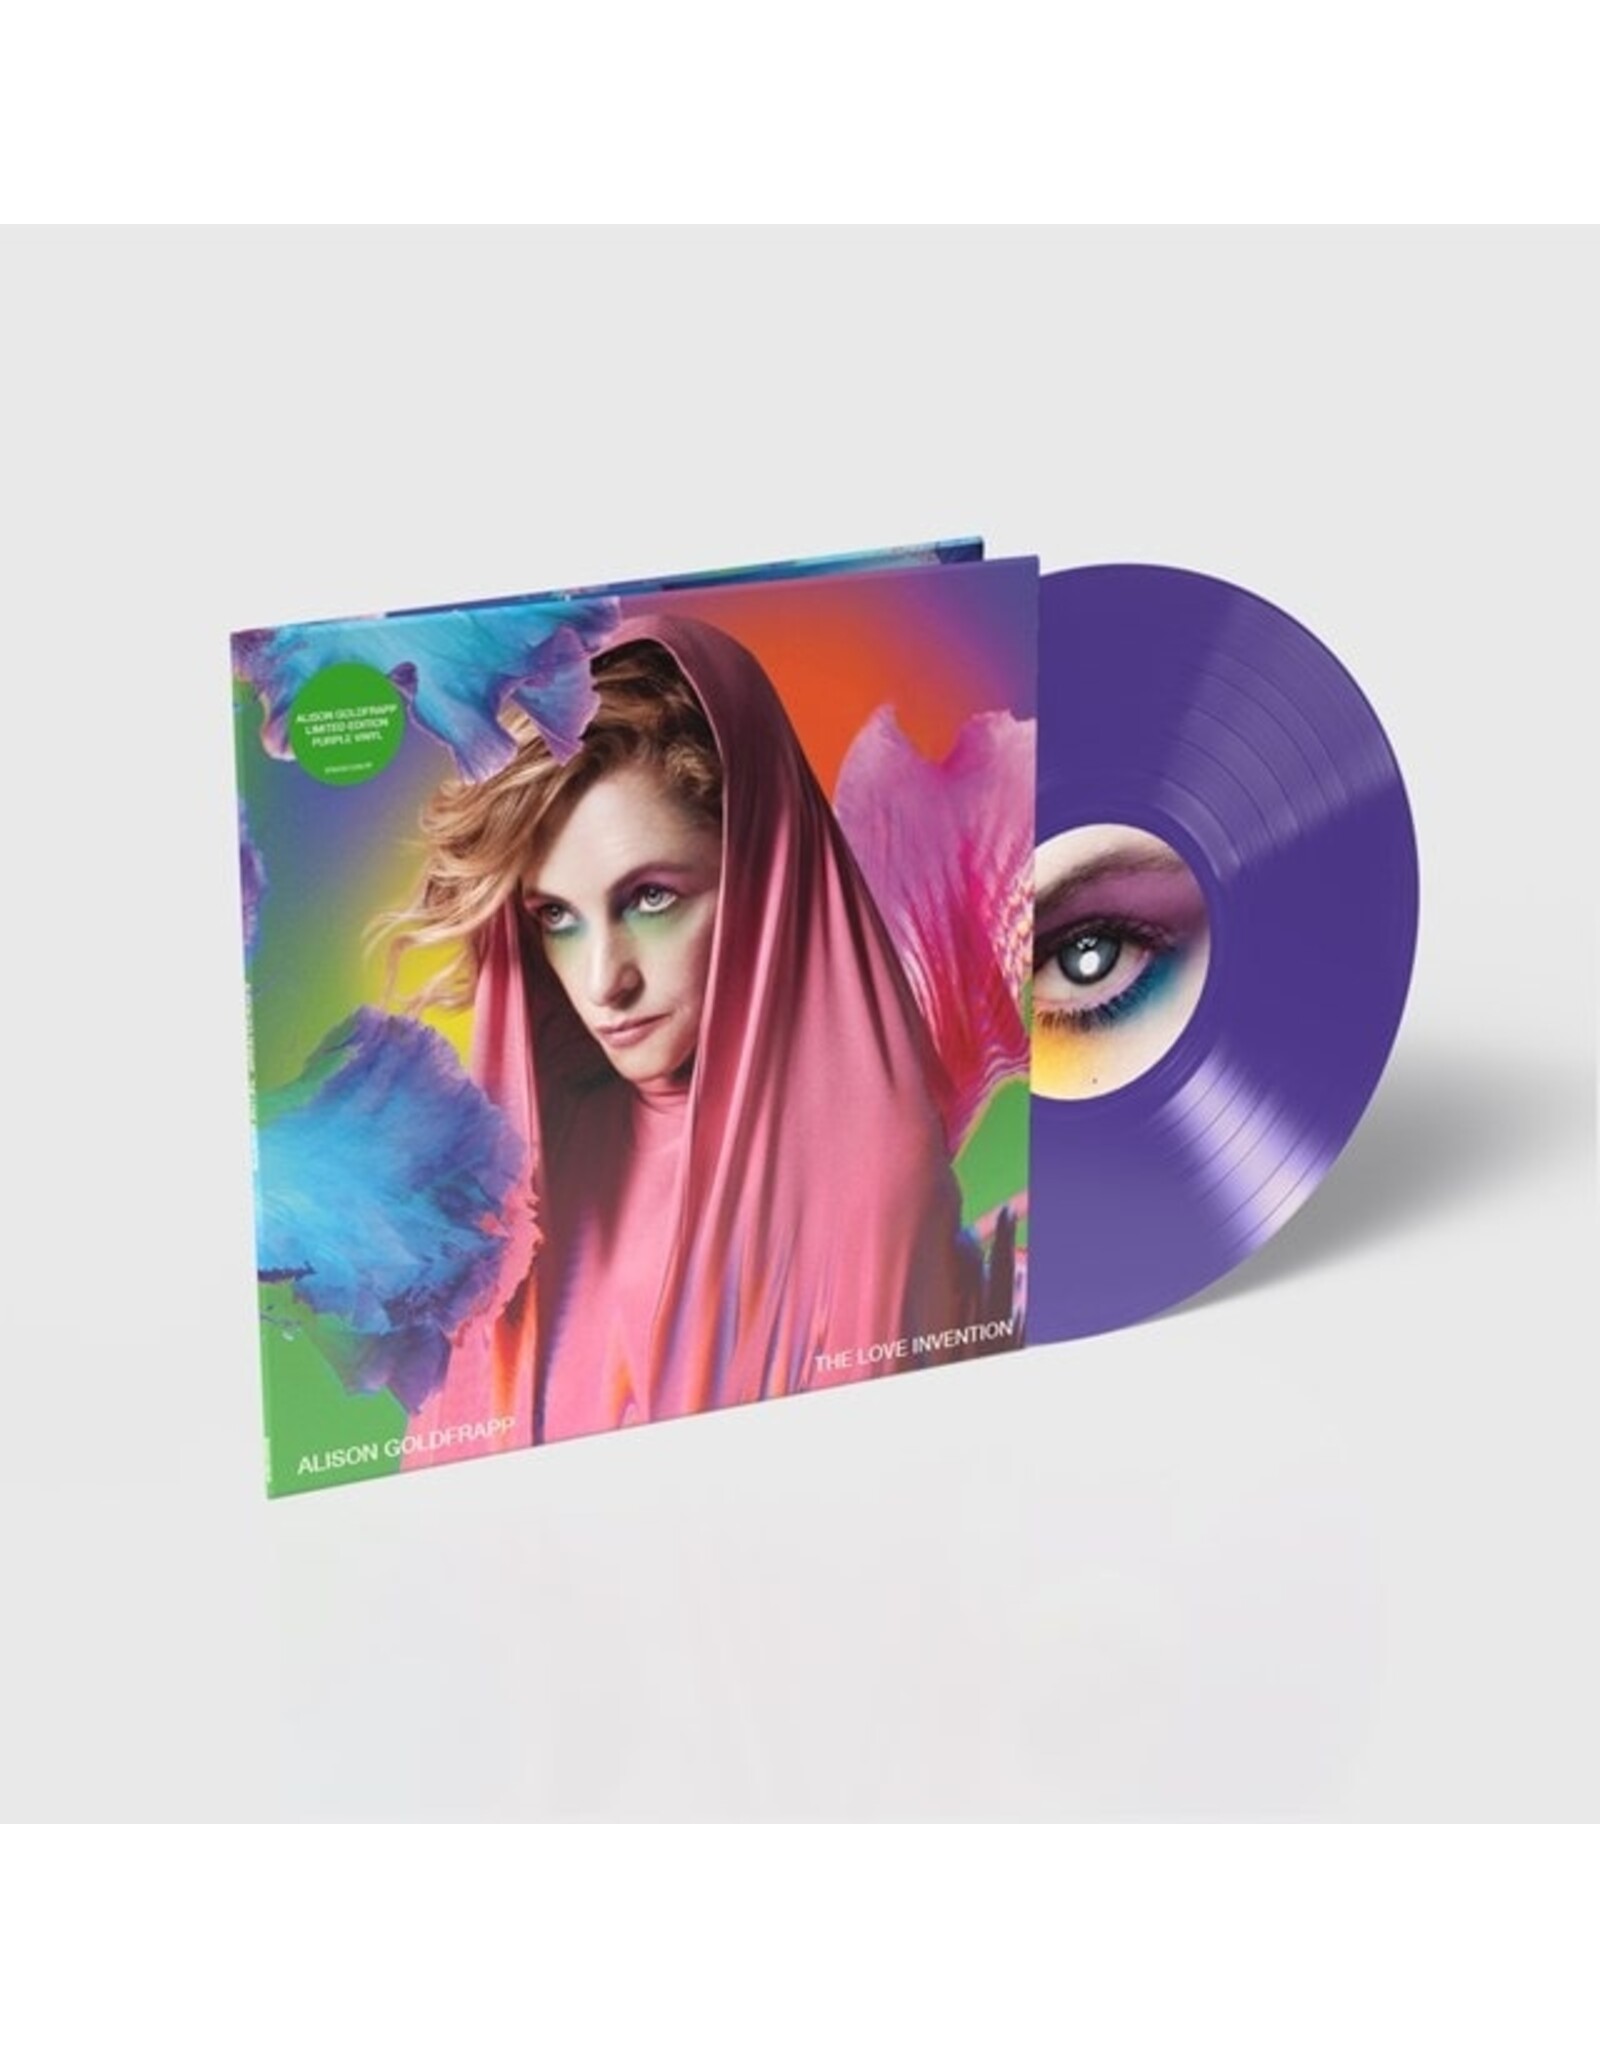 Alison Goldfrapp - The Love Invention (Exclusive Purple Vinyl)